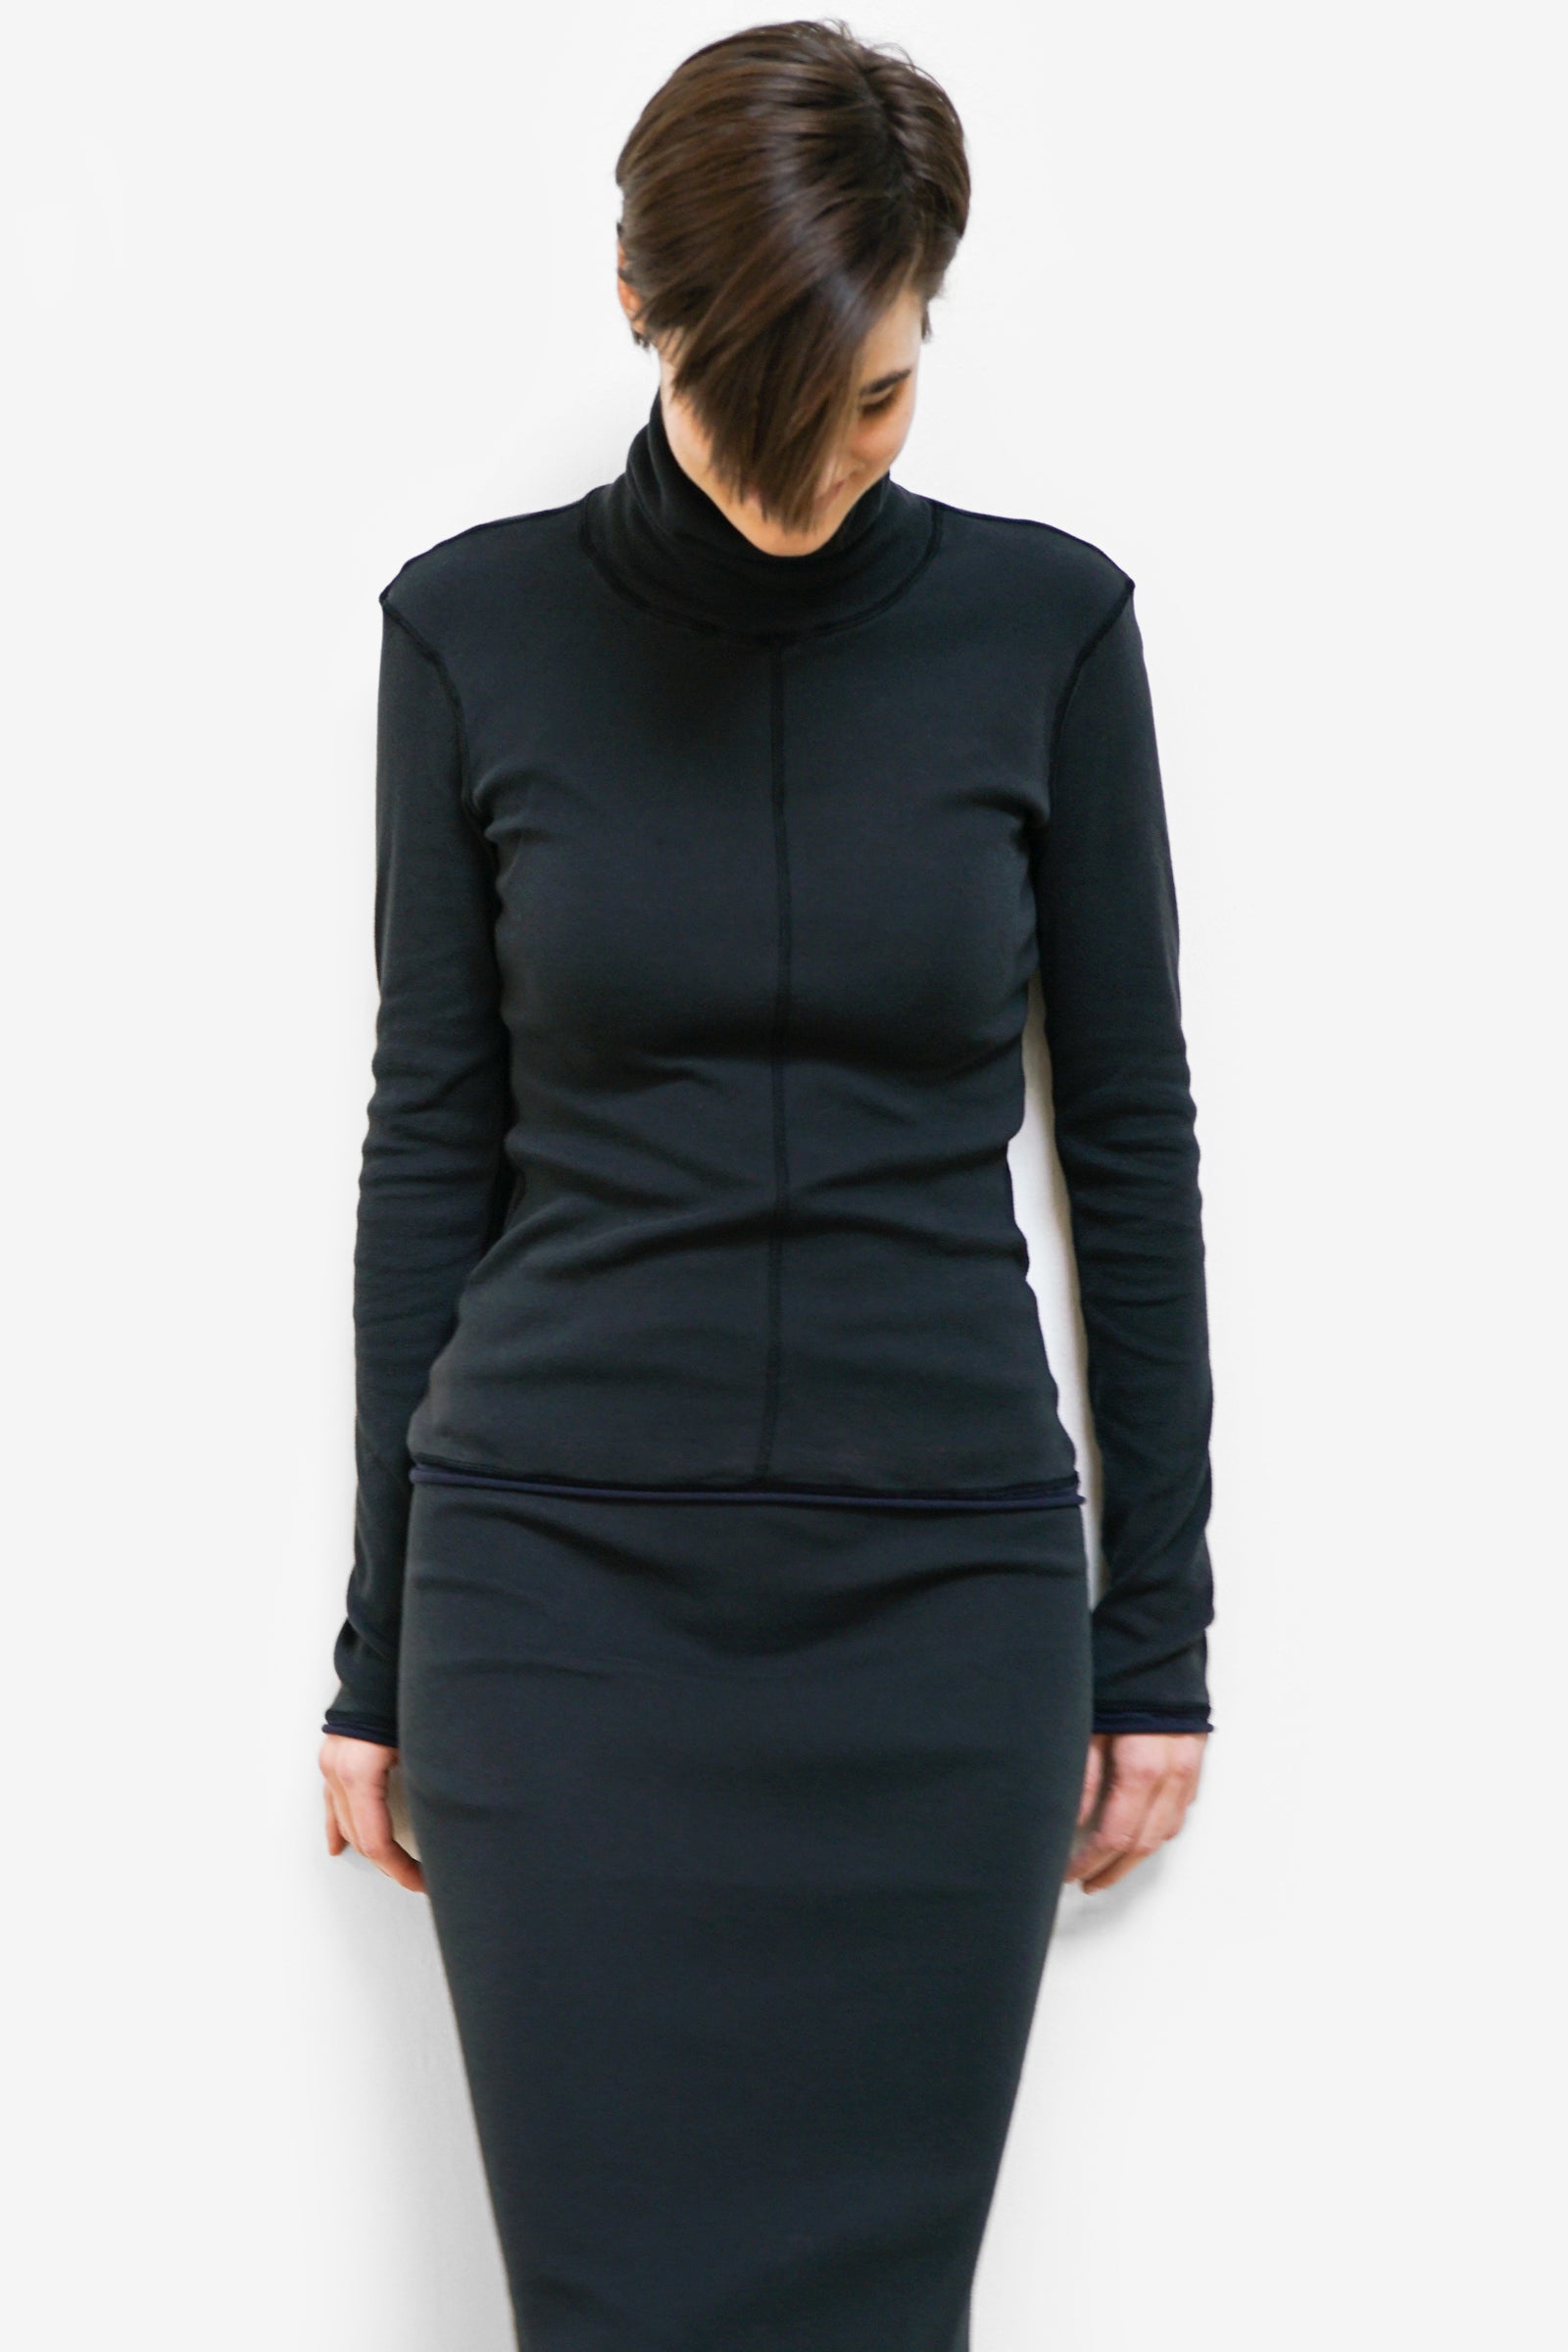 Model for Alabama Chanin organic cotton womens black rib turtleneck with long sleeves